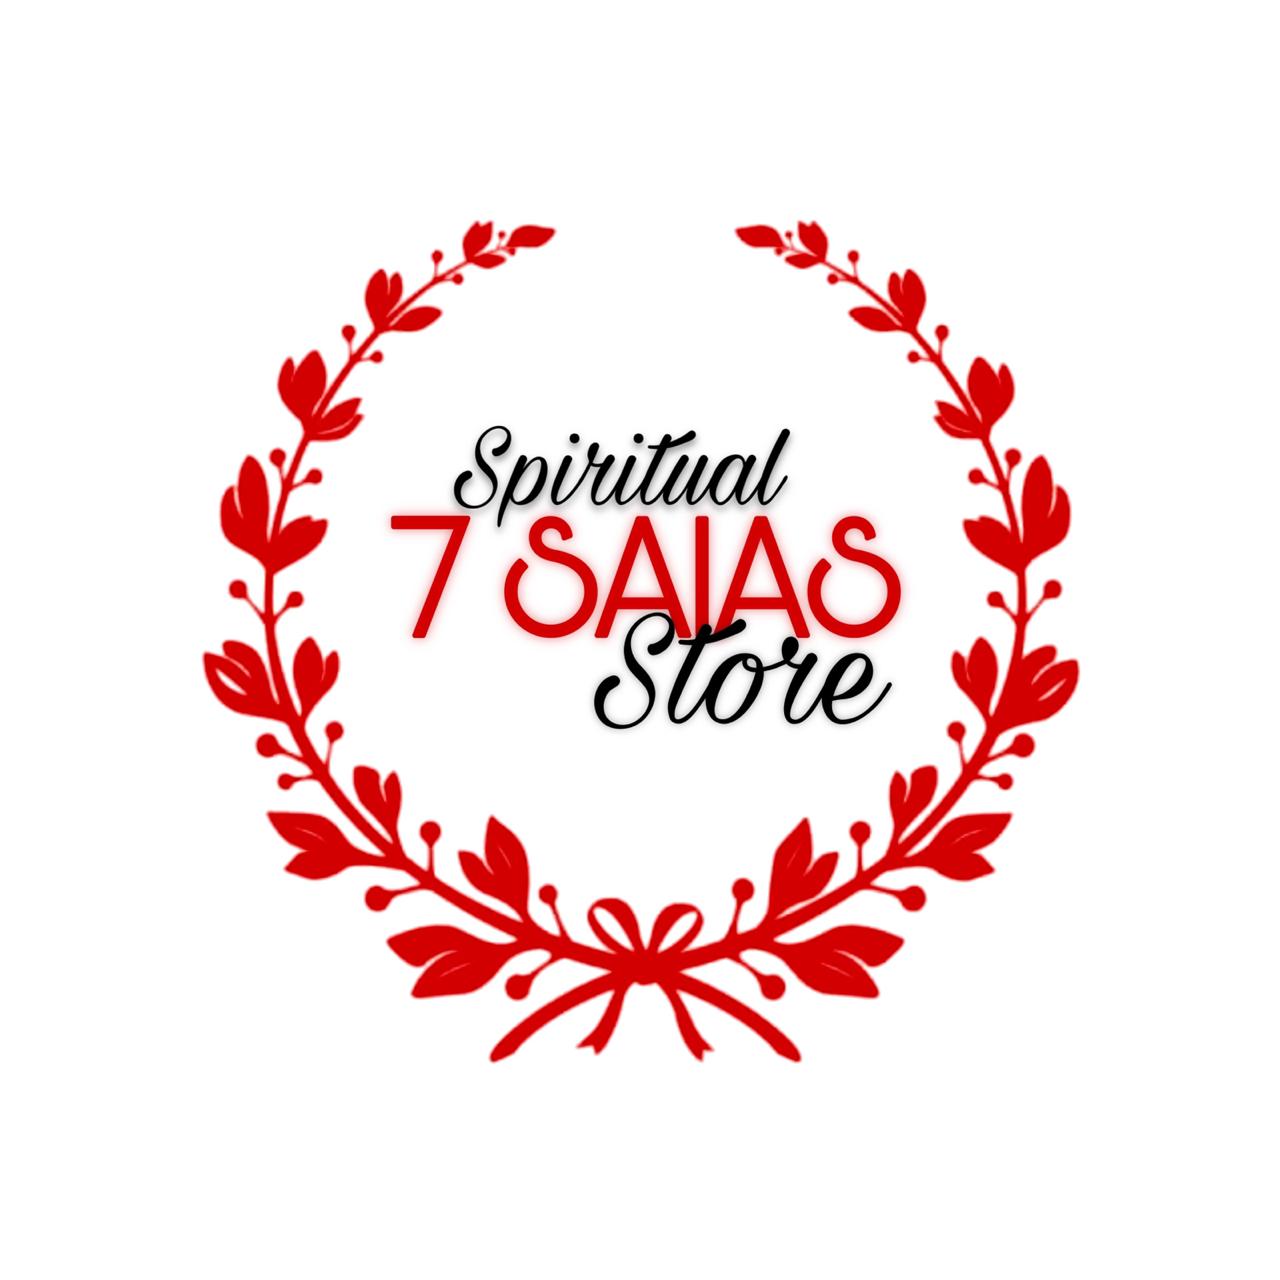 7 Saias Spiritual Store